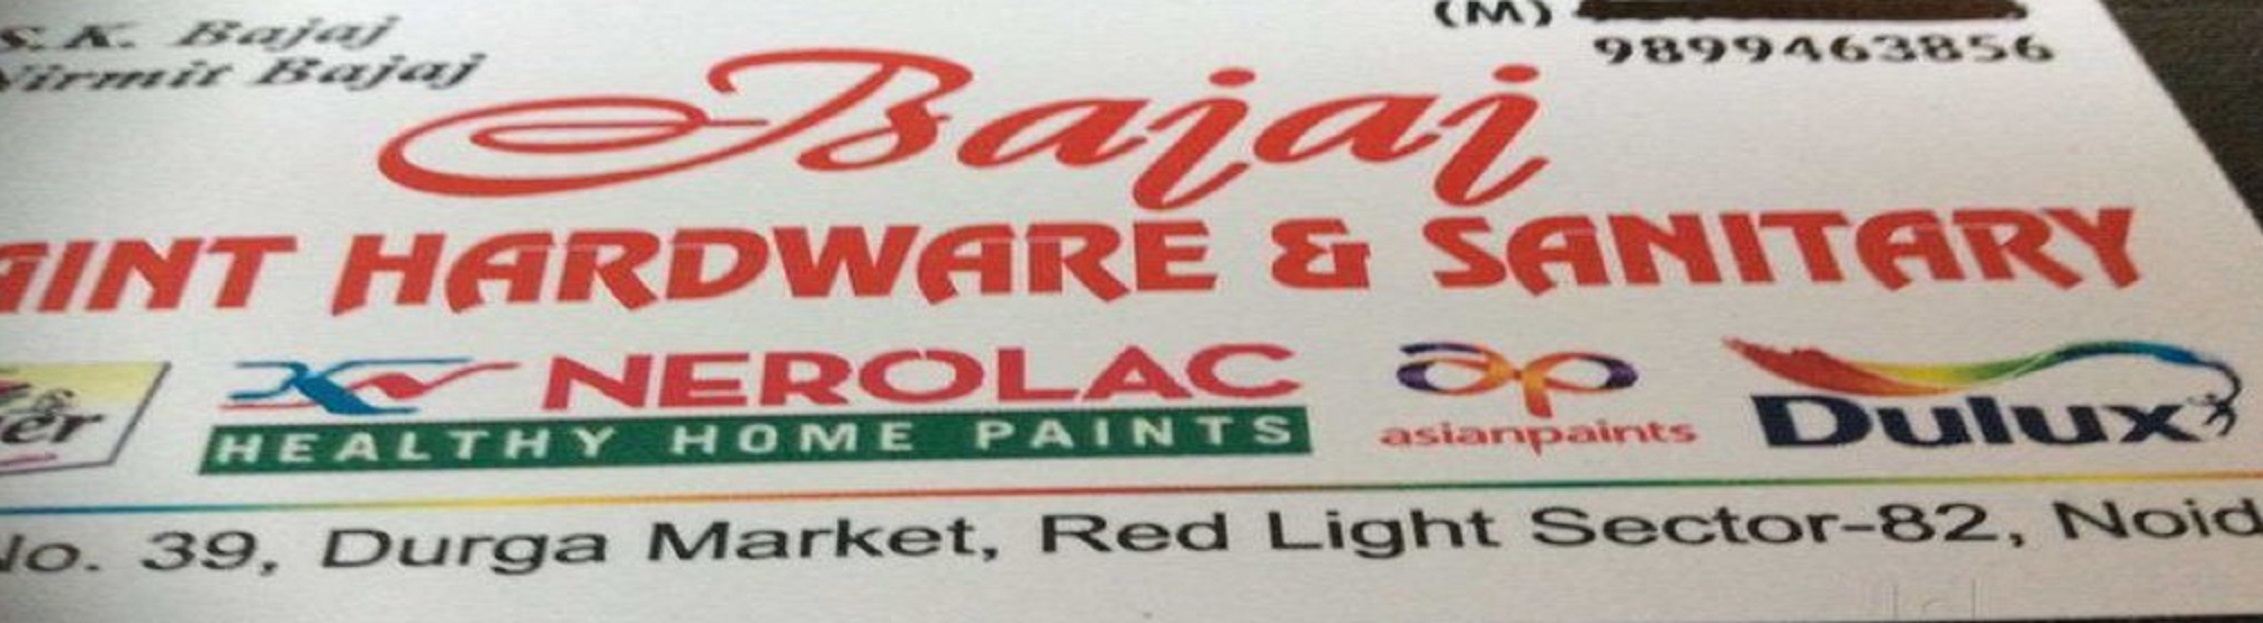 Bajaj Paint and  Hardware